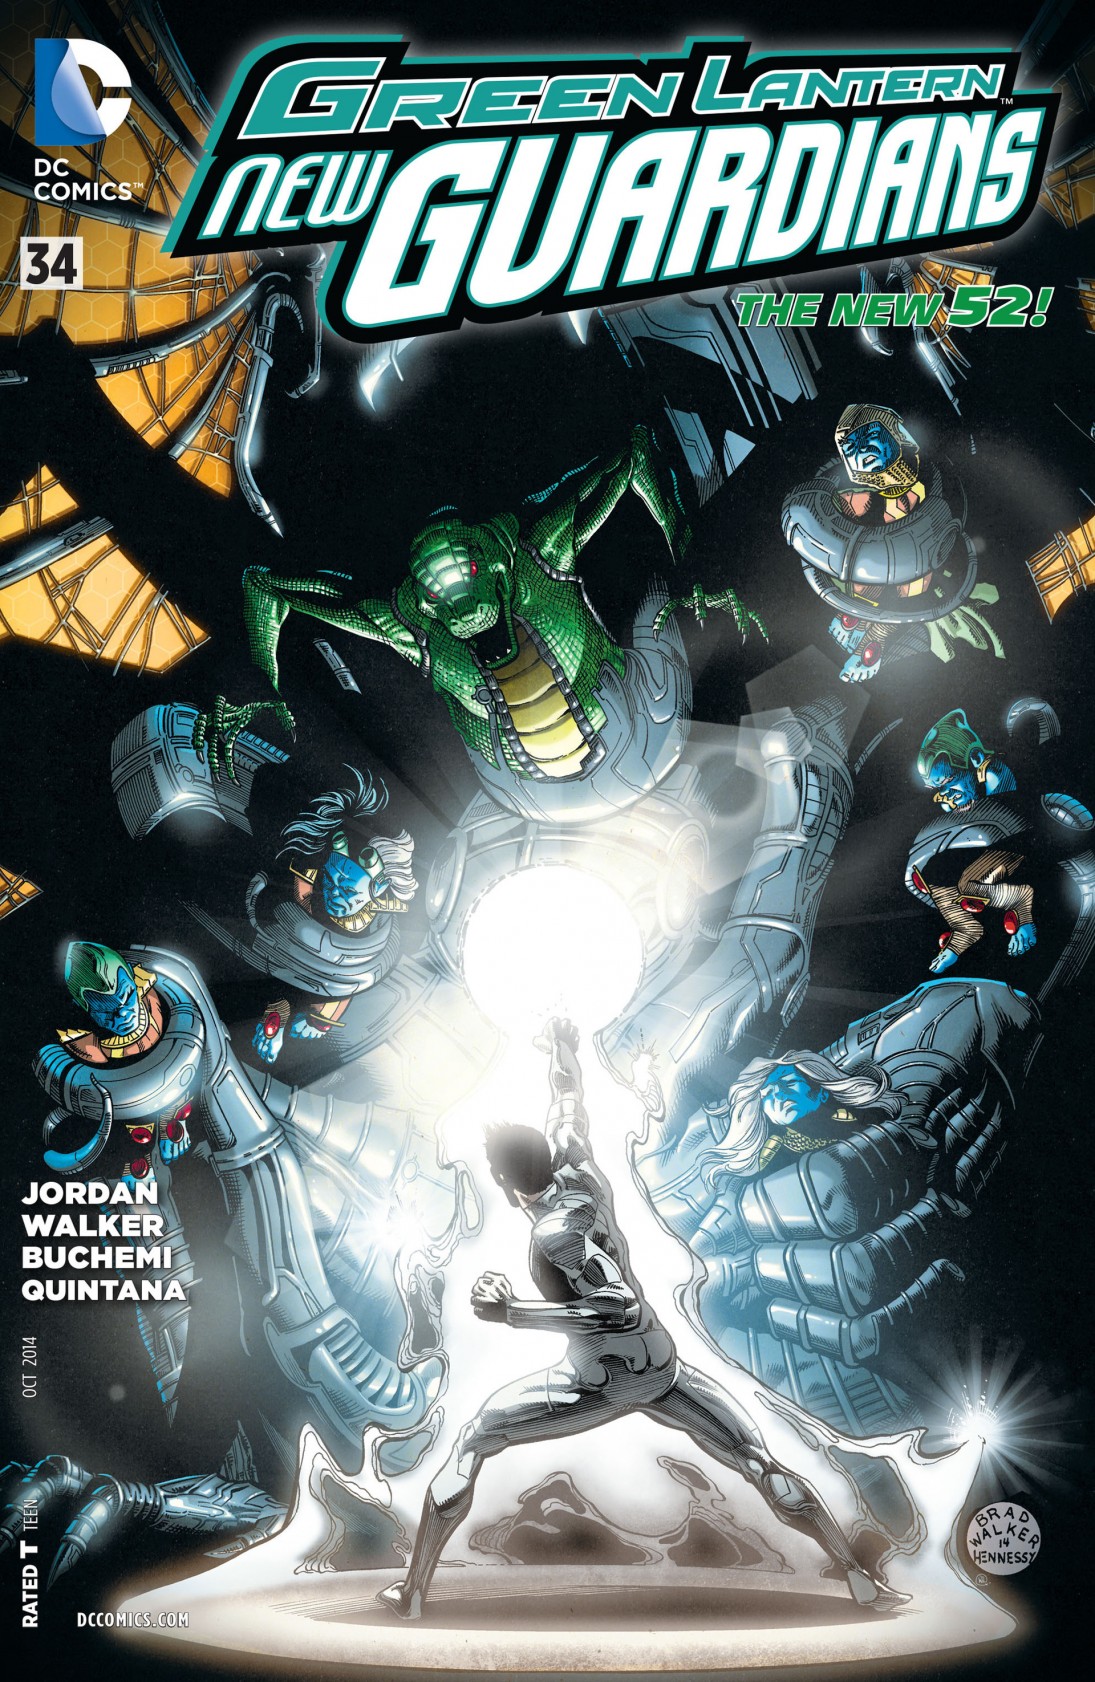 Green Lantern: New Guardians #34 Review - Major Spoilers